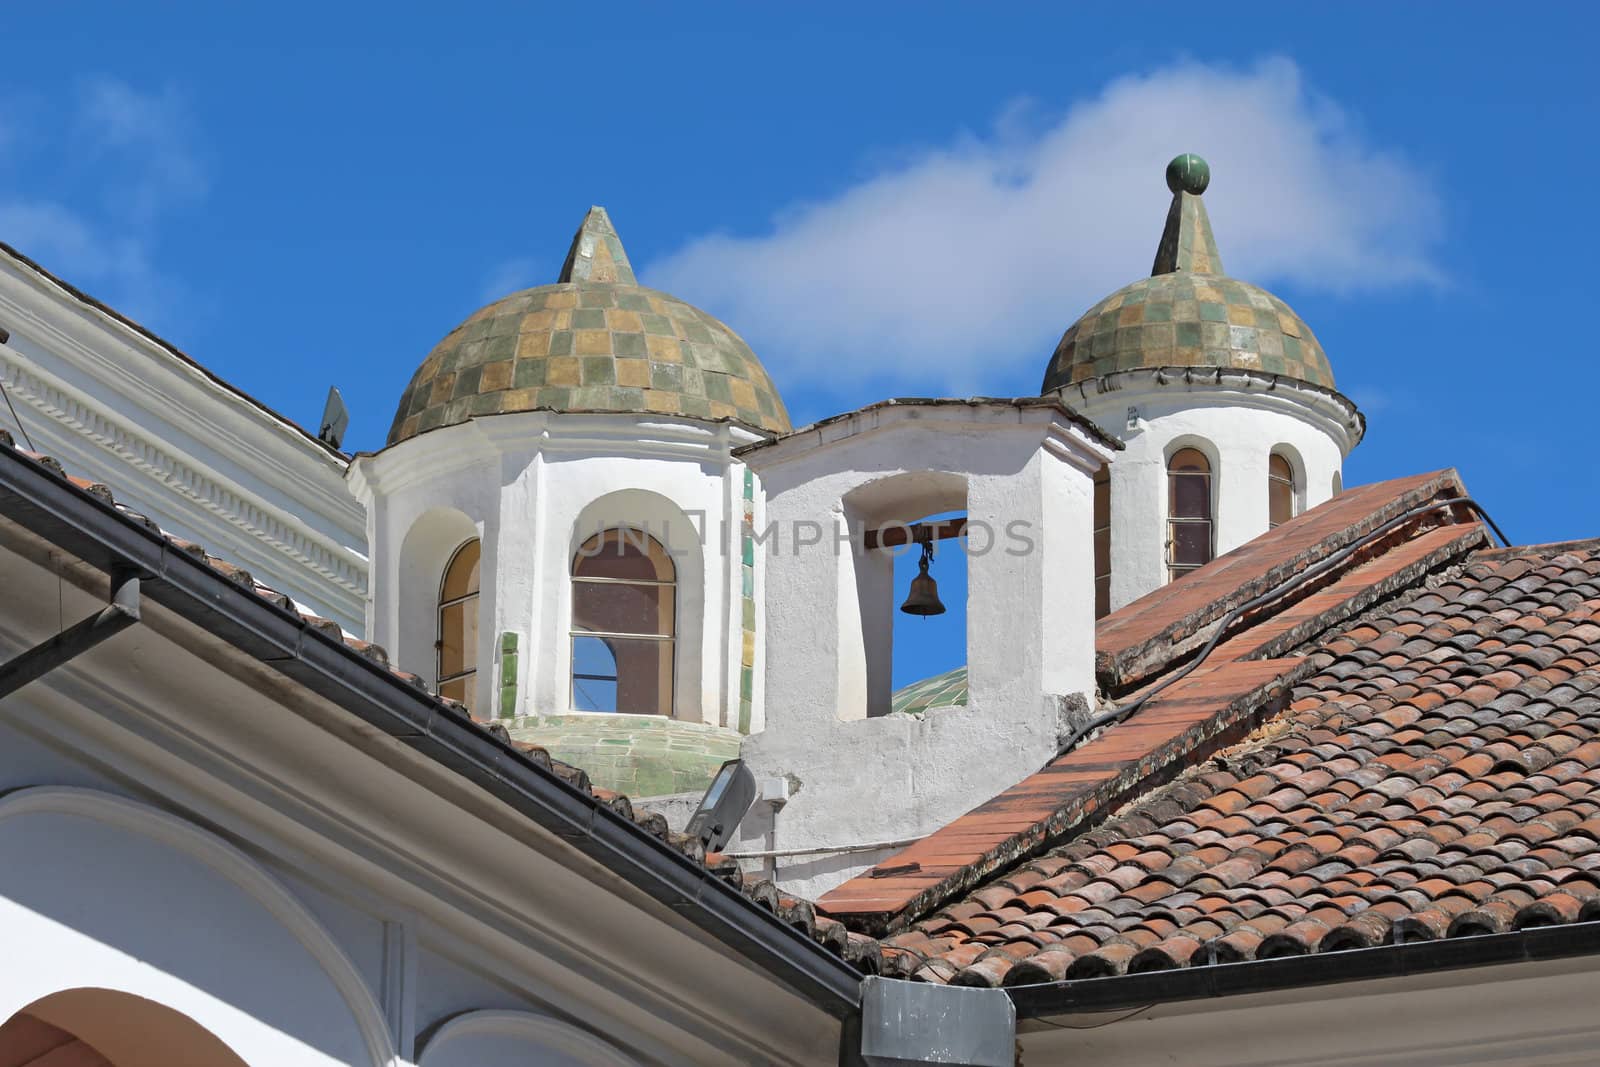 Domes at the church of San Francisco in Quito, Ecuador by sgoodwin4813